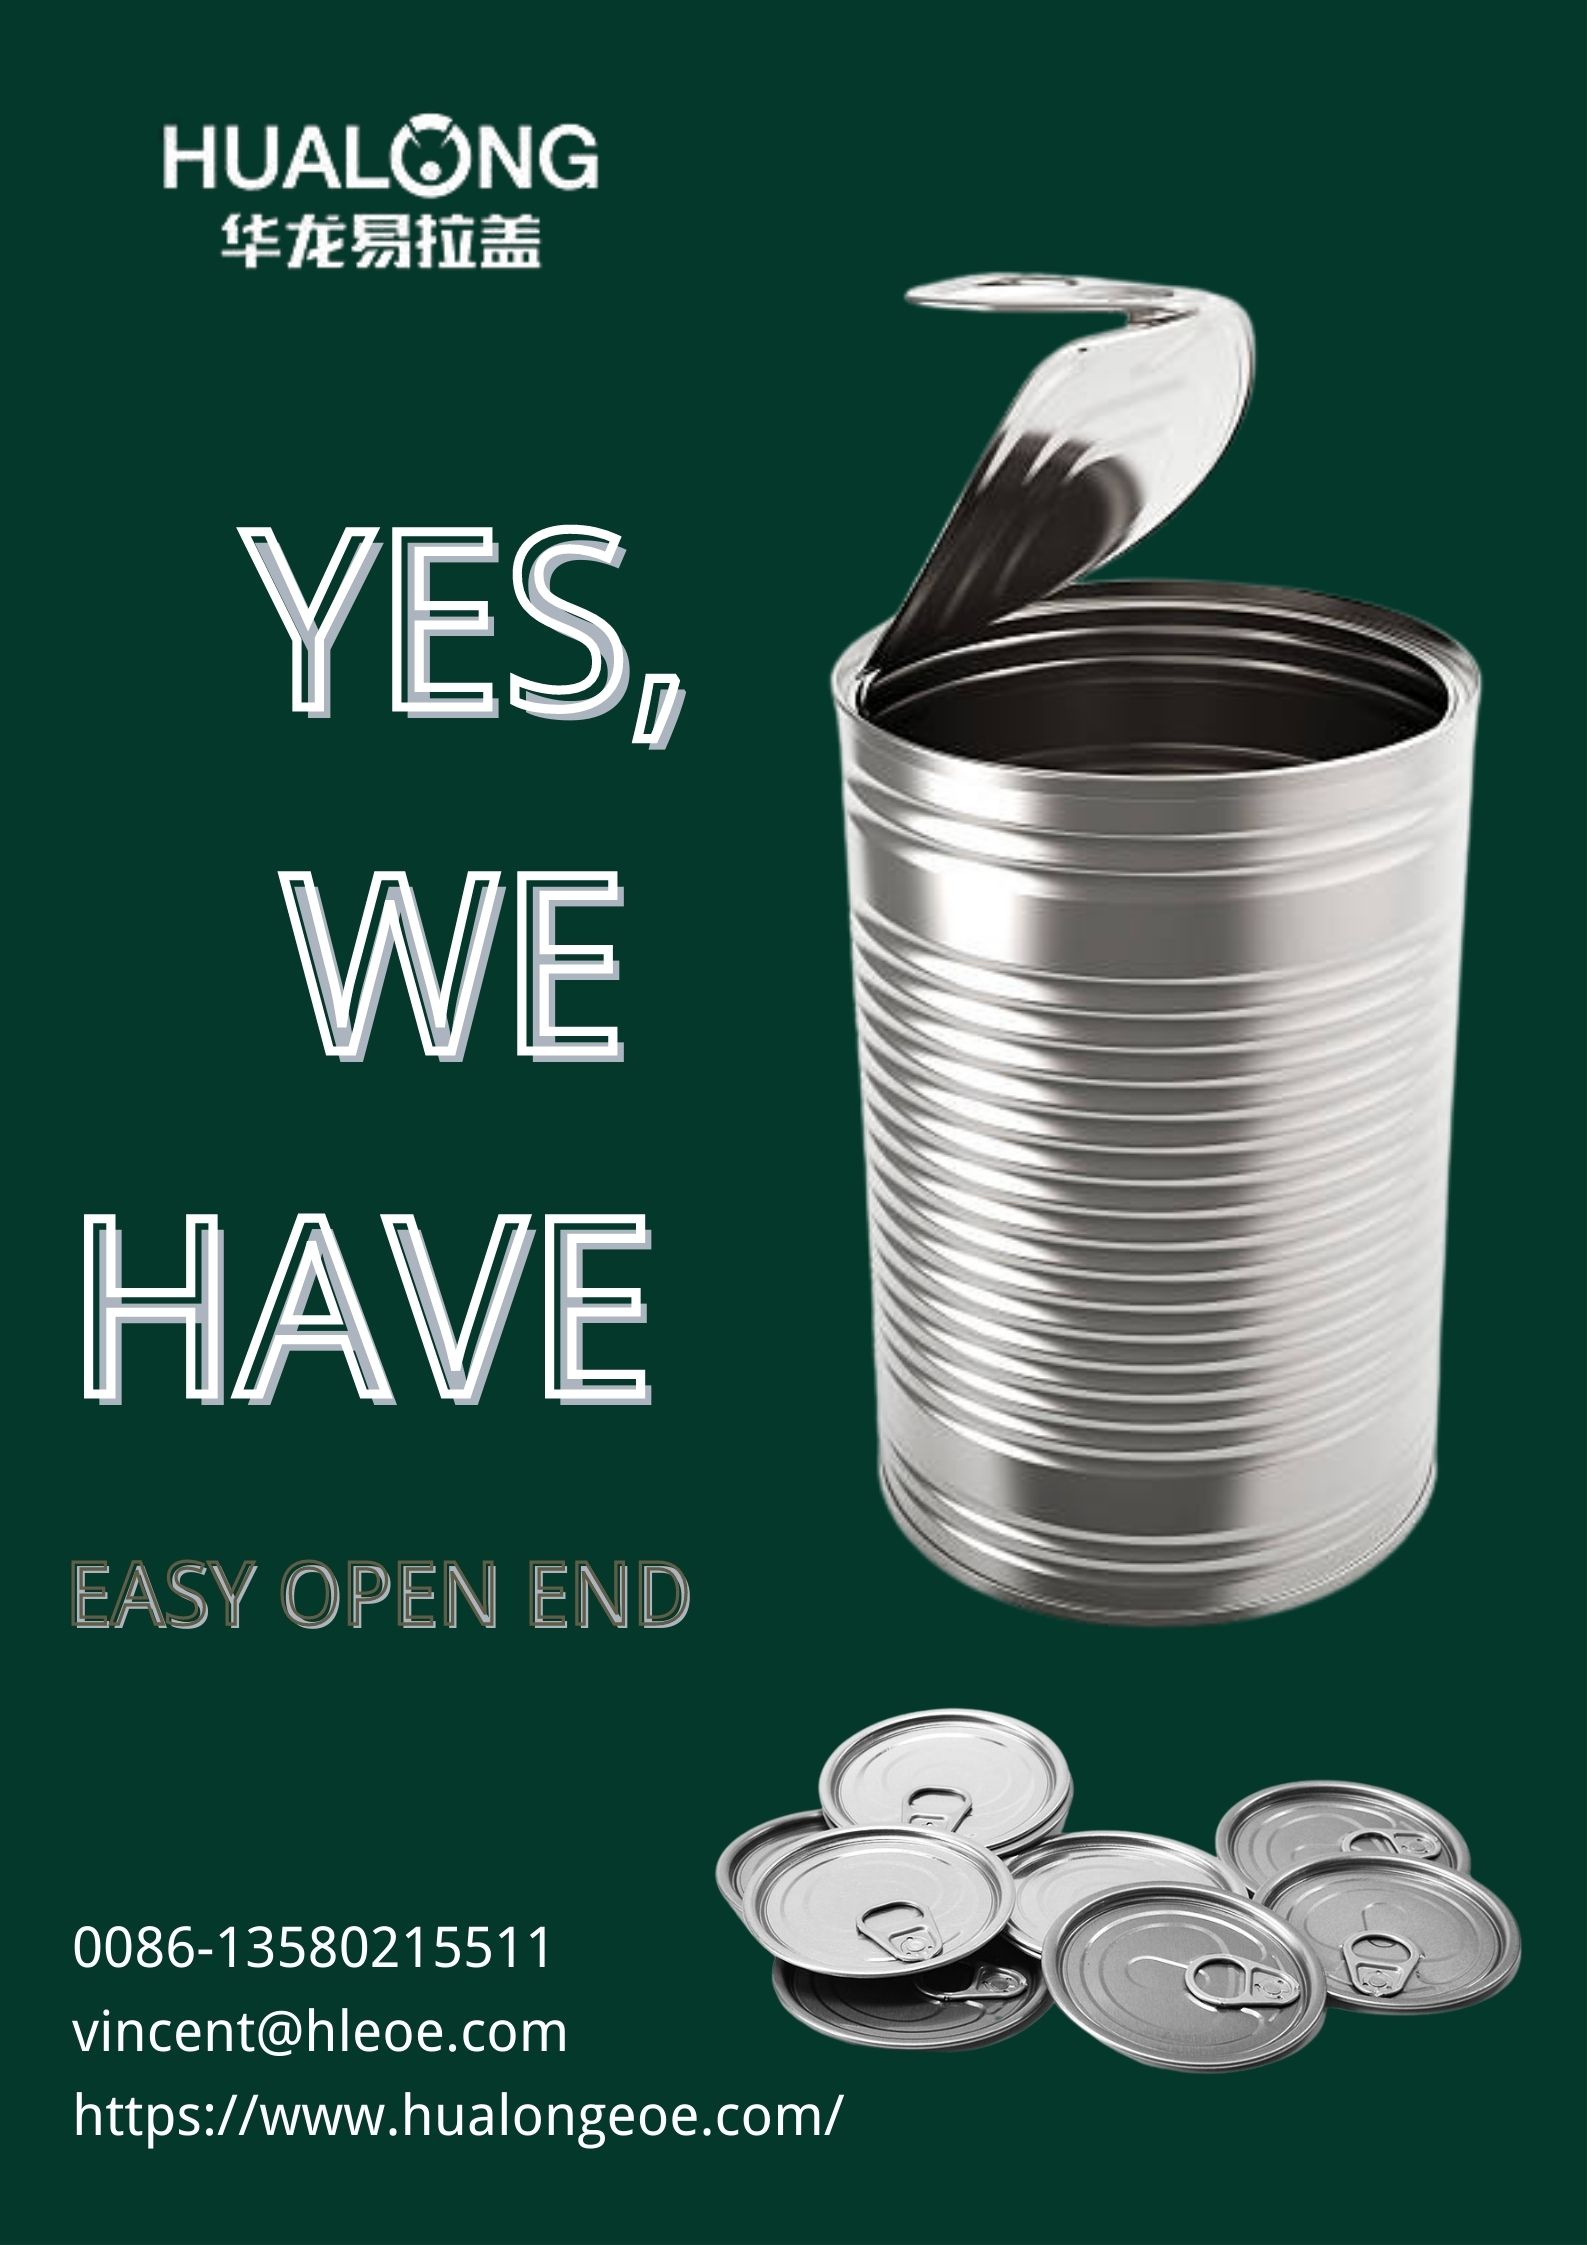 Hualong EOE: come riciclare correttamente Easy Open End?